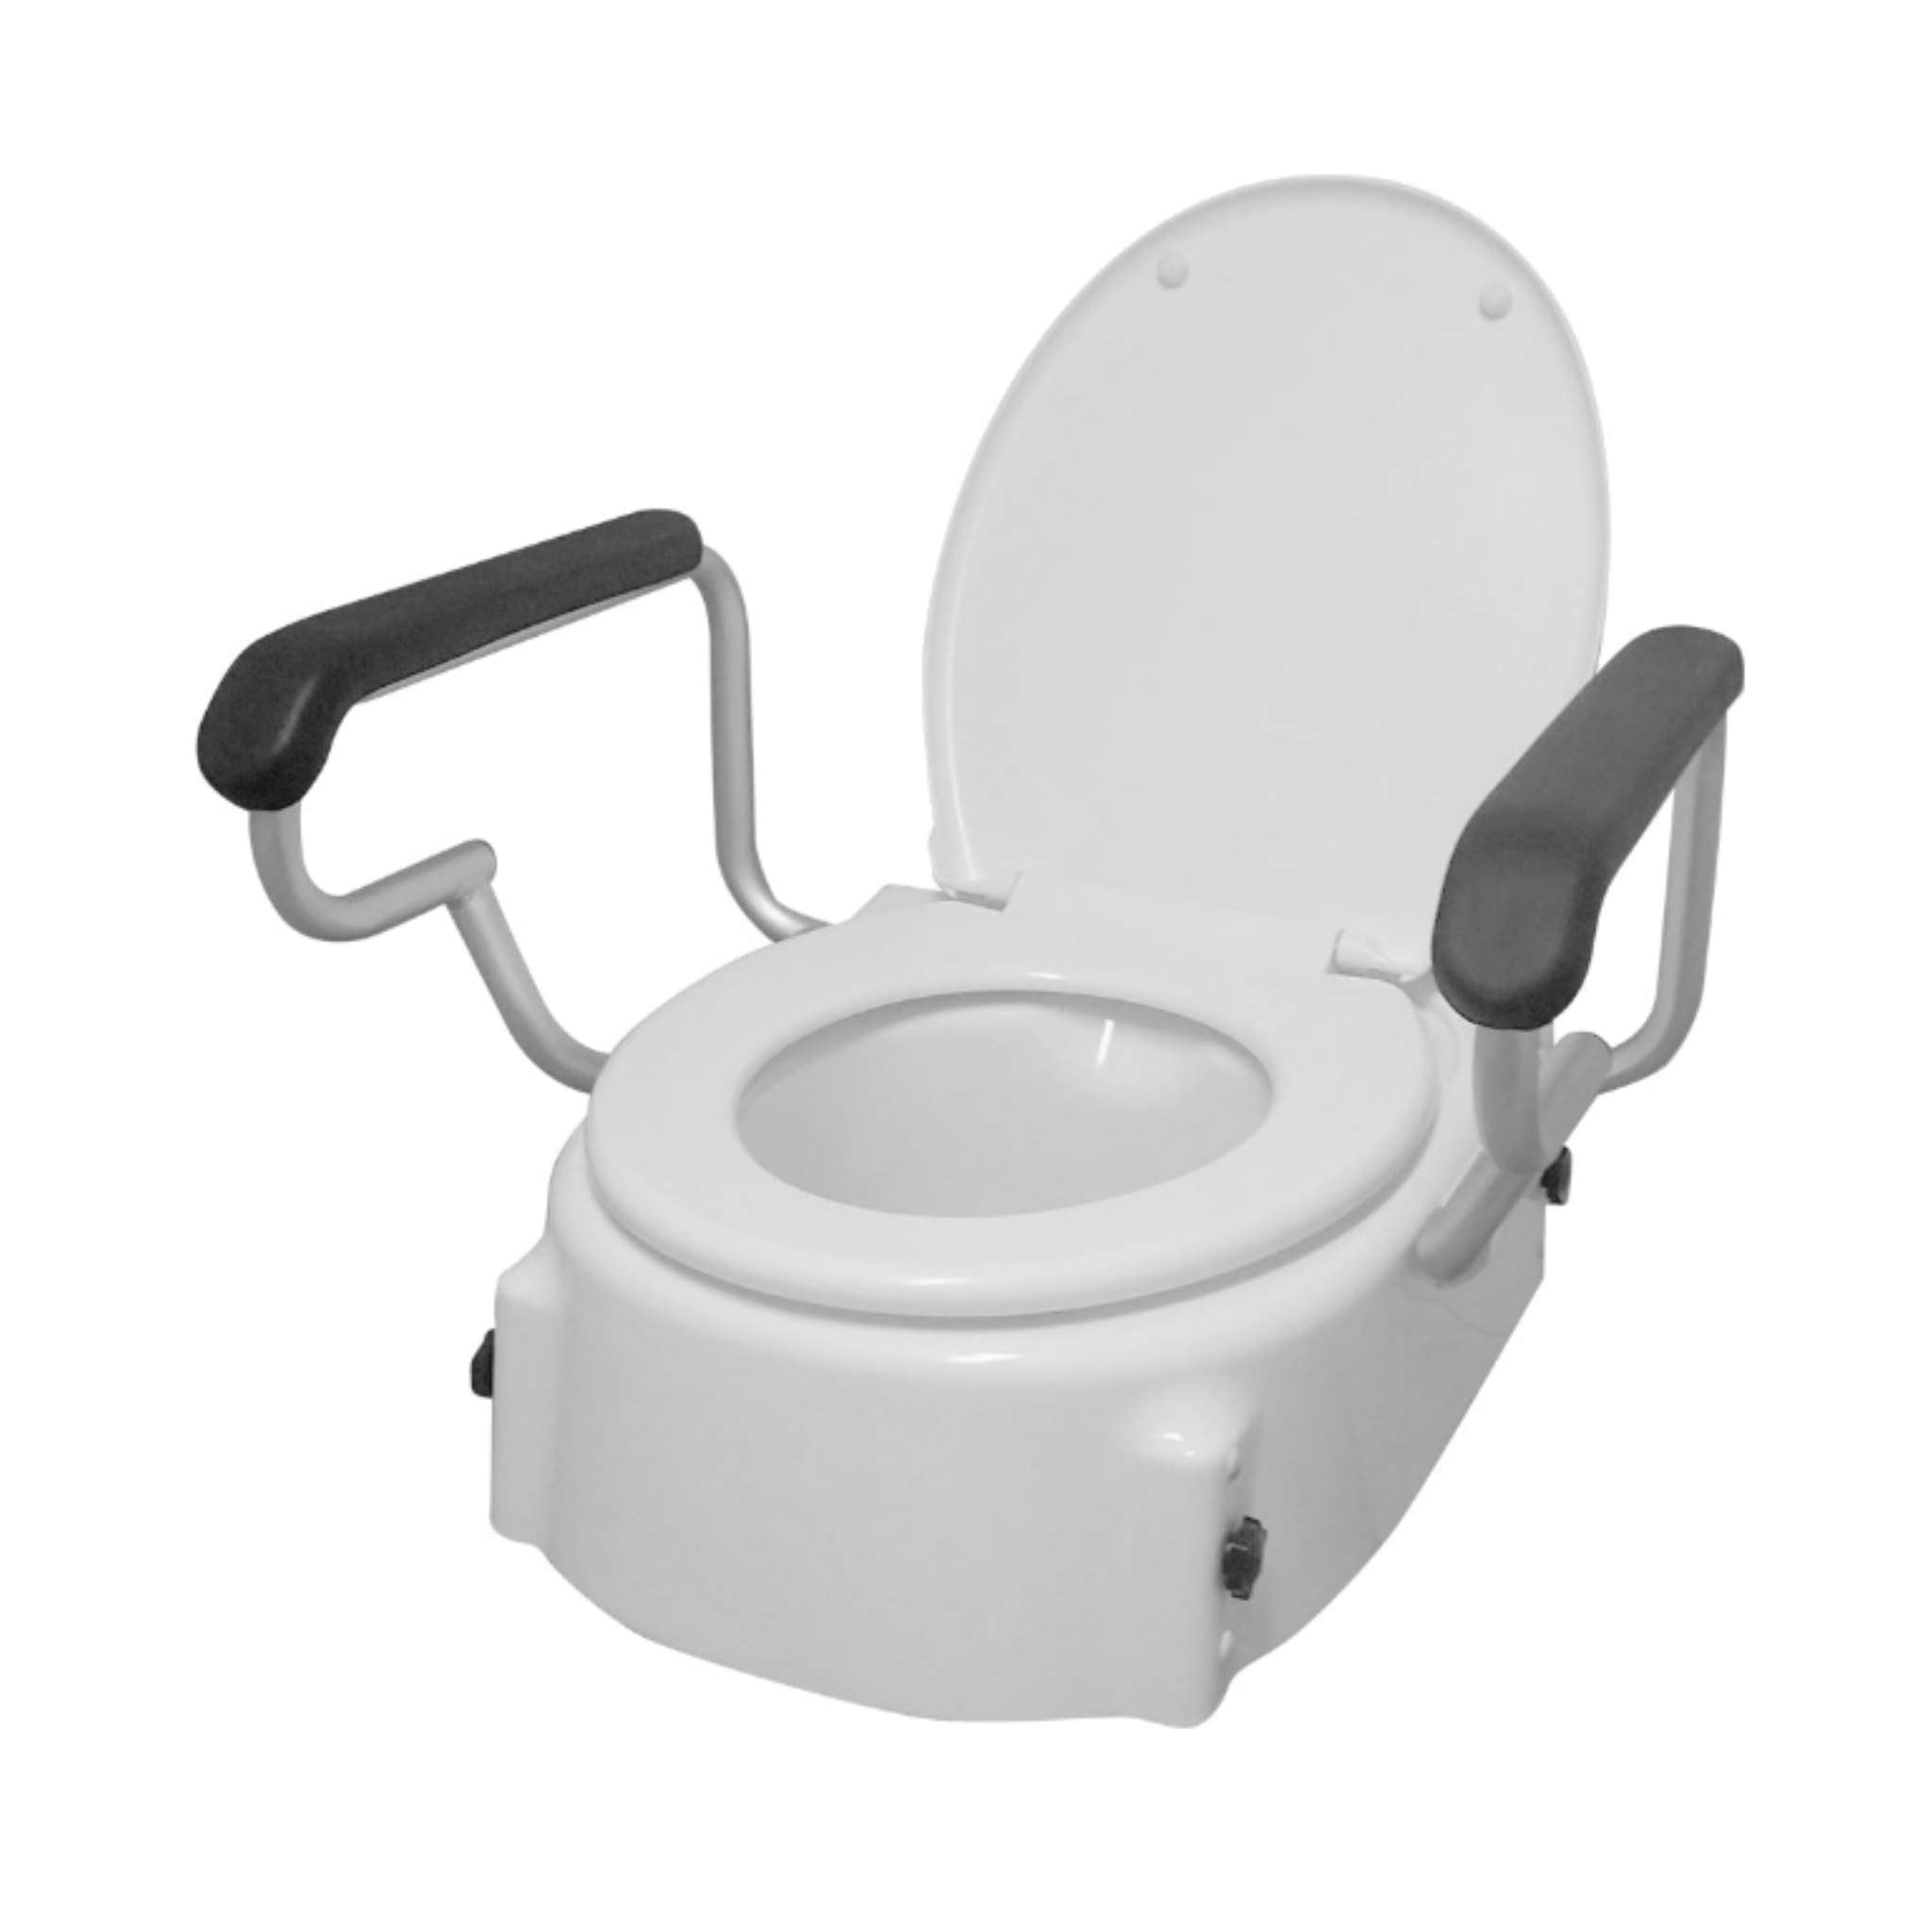 BetterLiving Adjustable Toilet Seat Raiser